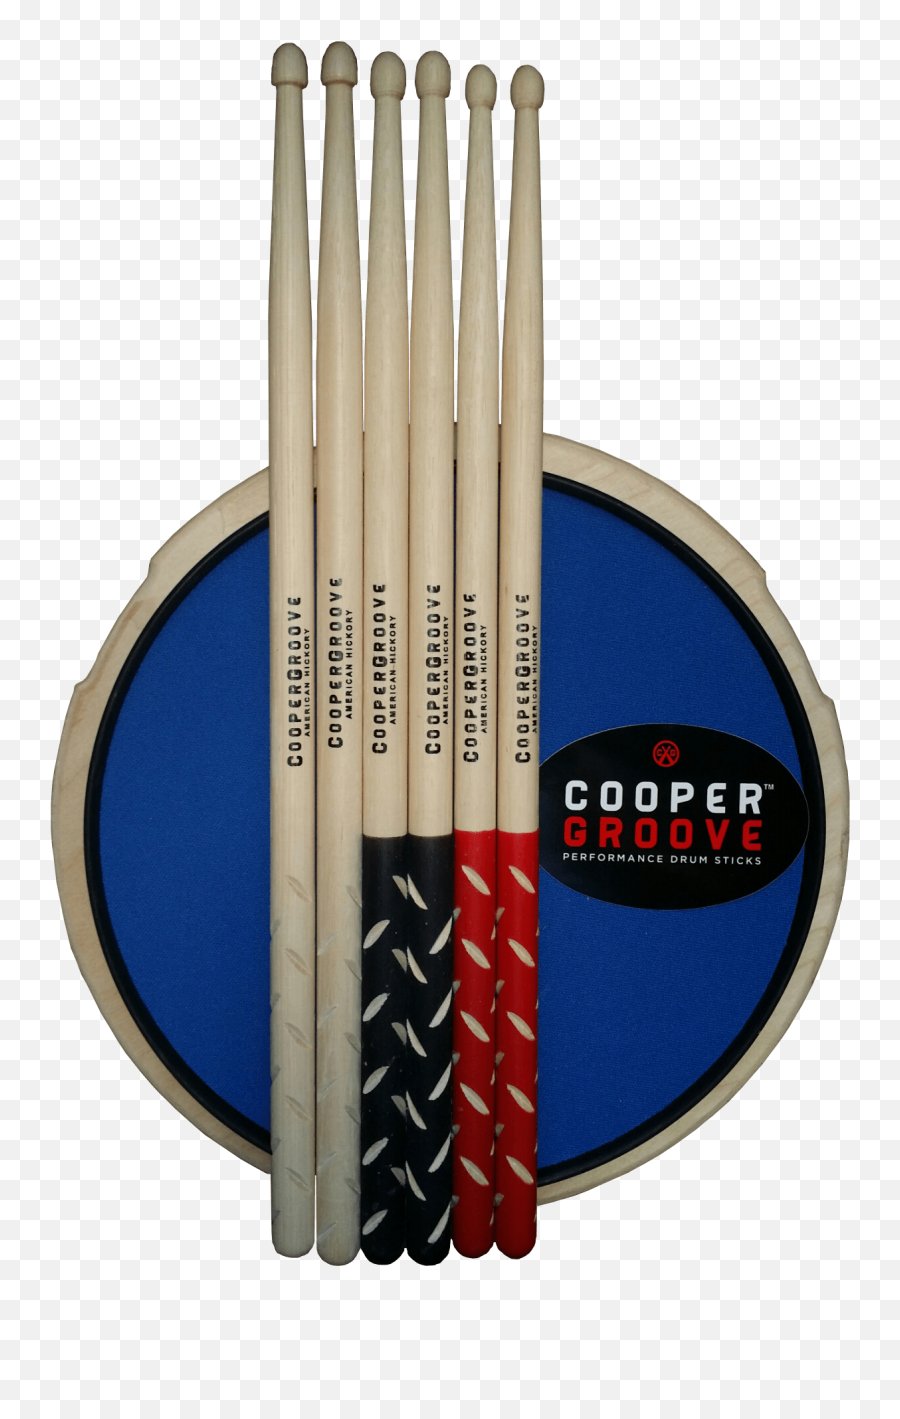 Groovegrip Performance Drumsticks - Cooper Groove Drumsticks Png,Drum Sticks Png